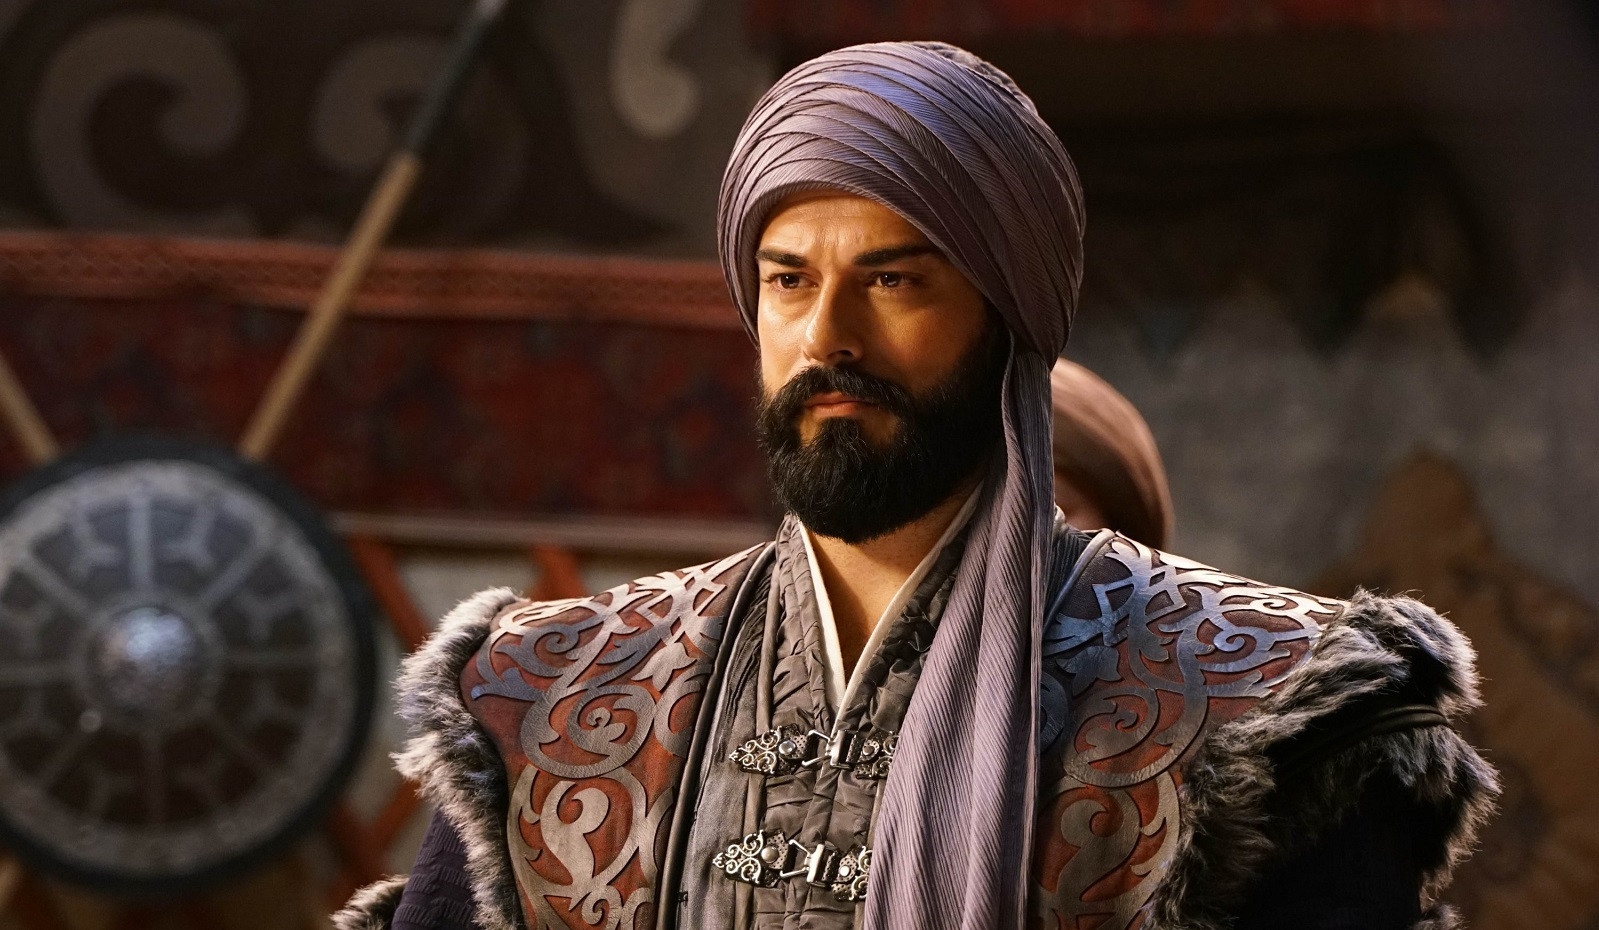 Turkish actor Burak Özçivit is coming to Bangladesh